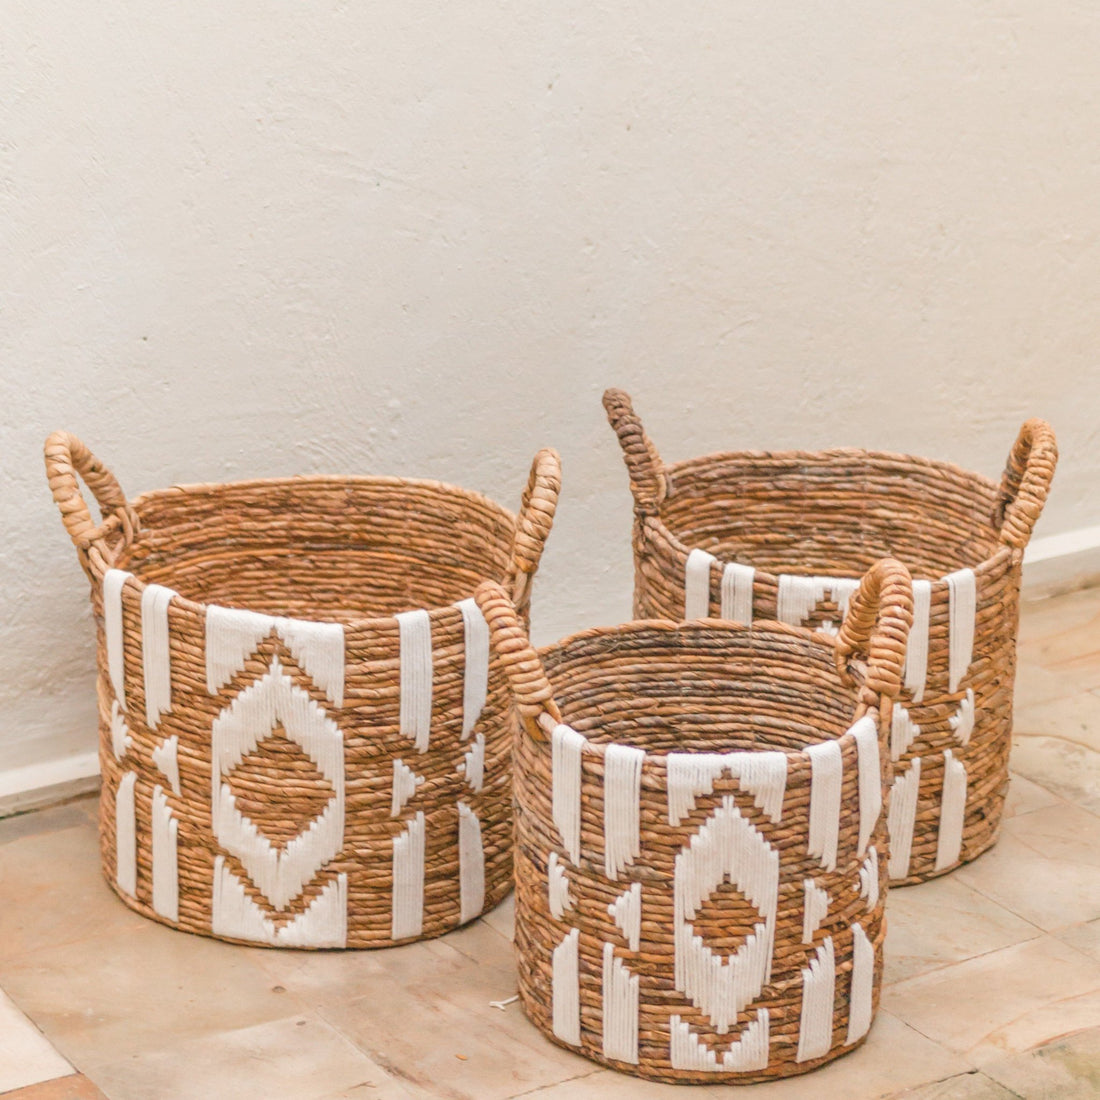 Laundry Basket Plant Basket Large Storage Basket Round NASARI Made of Banana Fibre with a Macrame Pattern made of Cotton